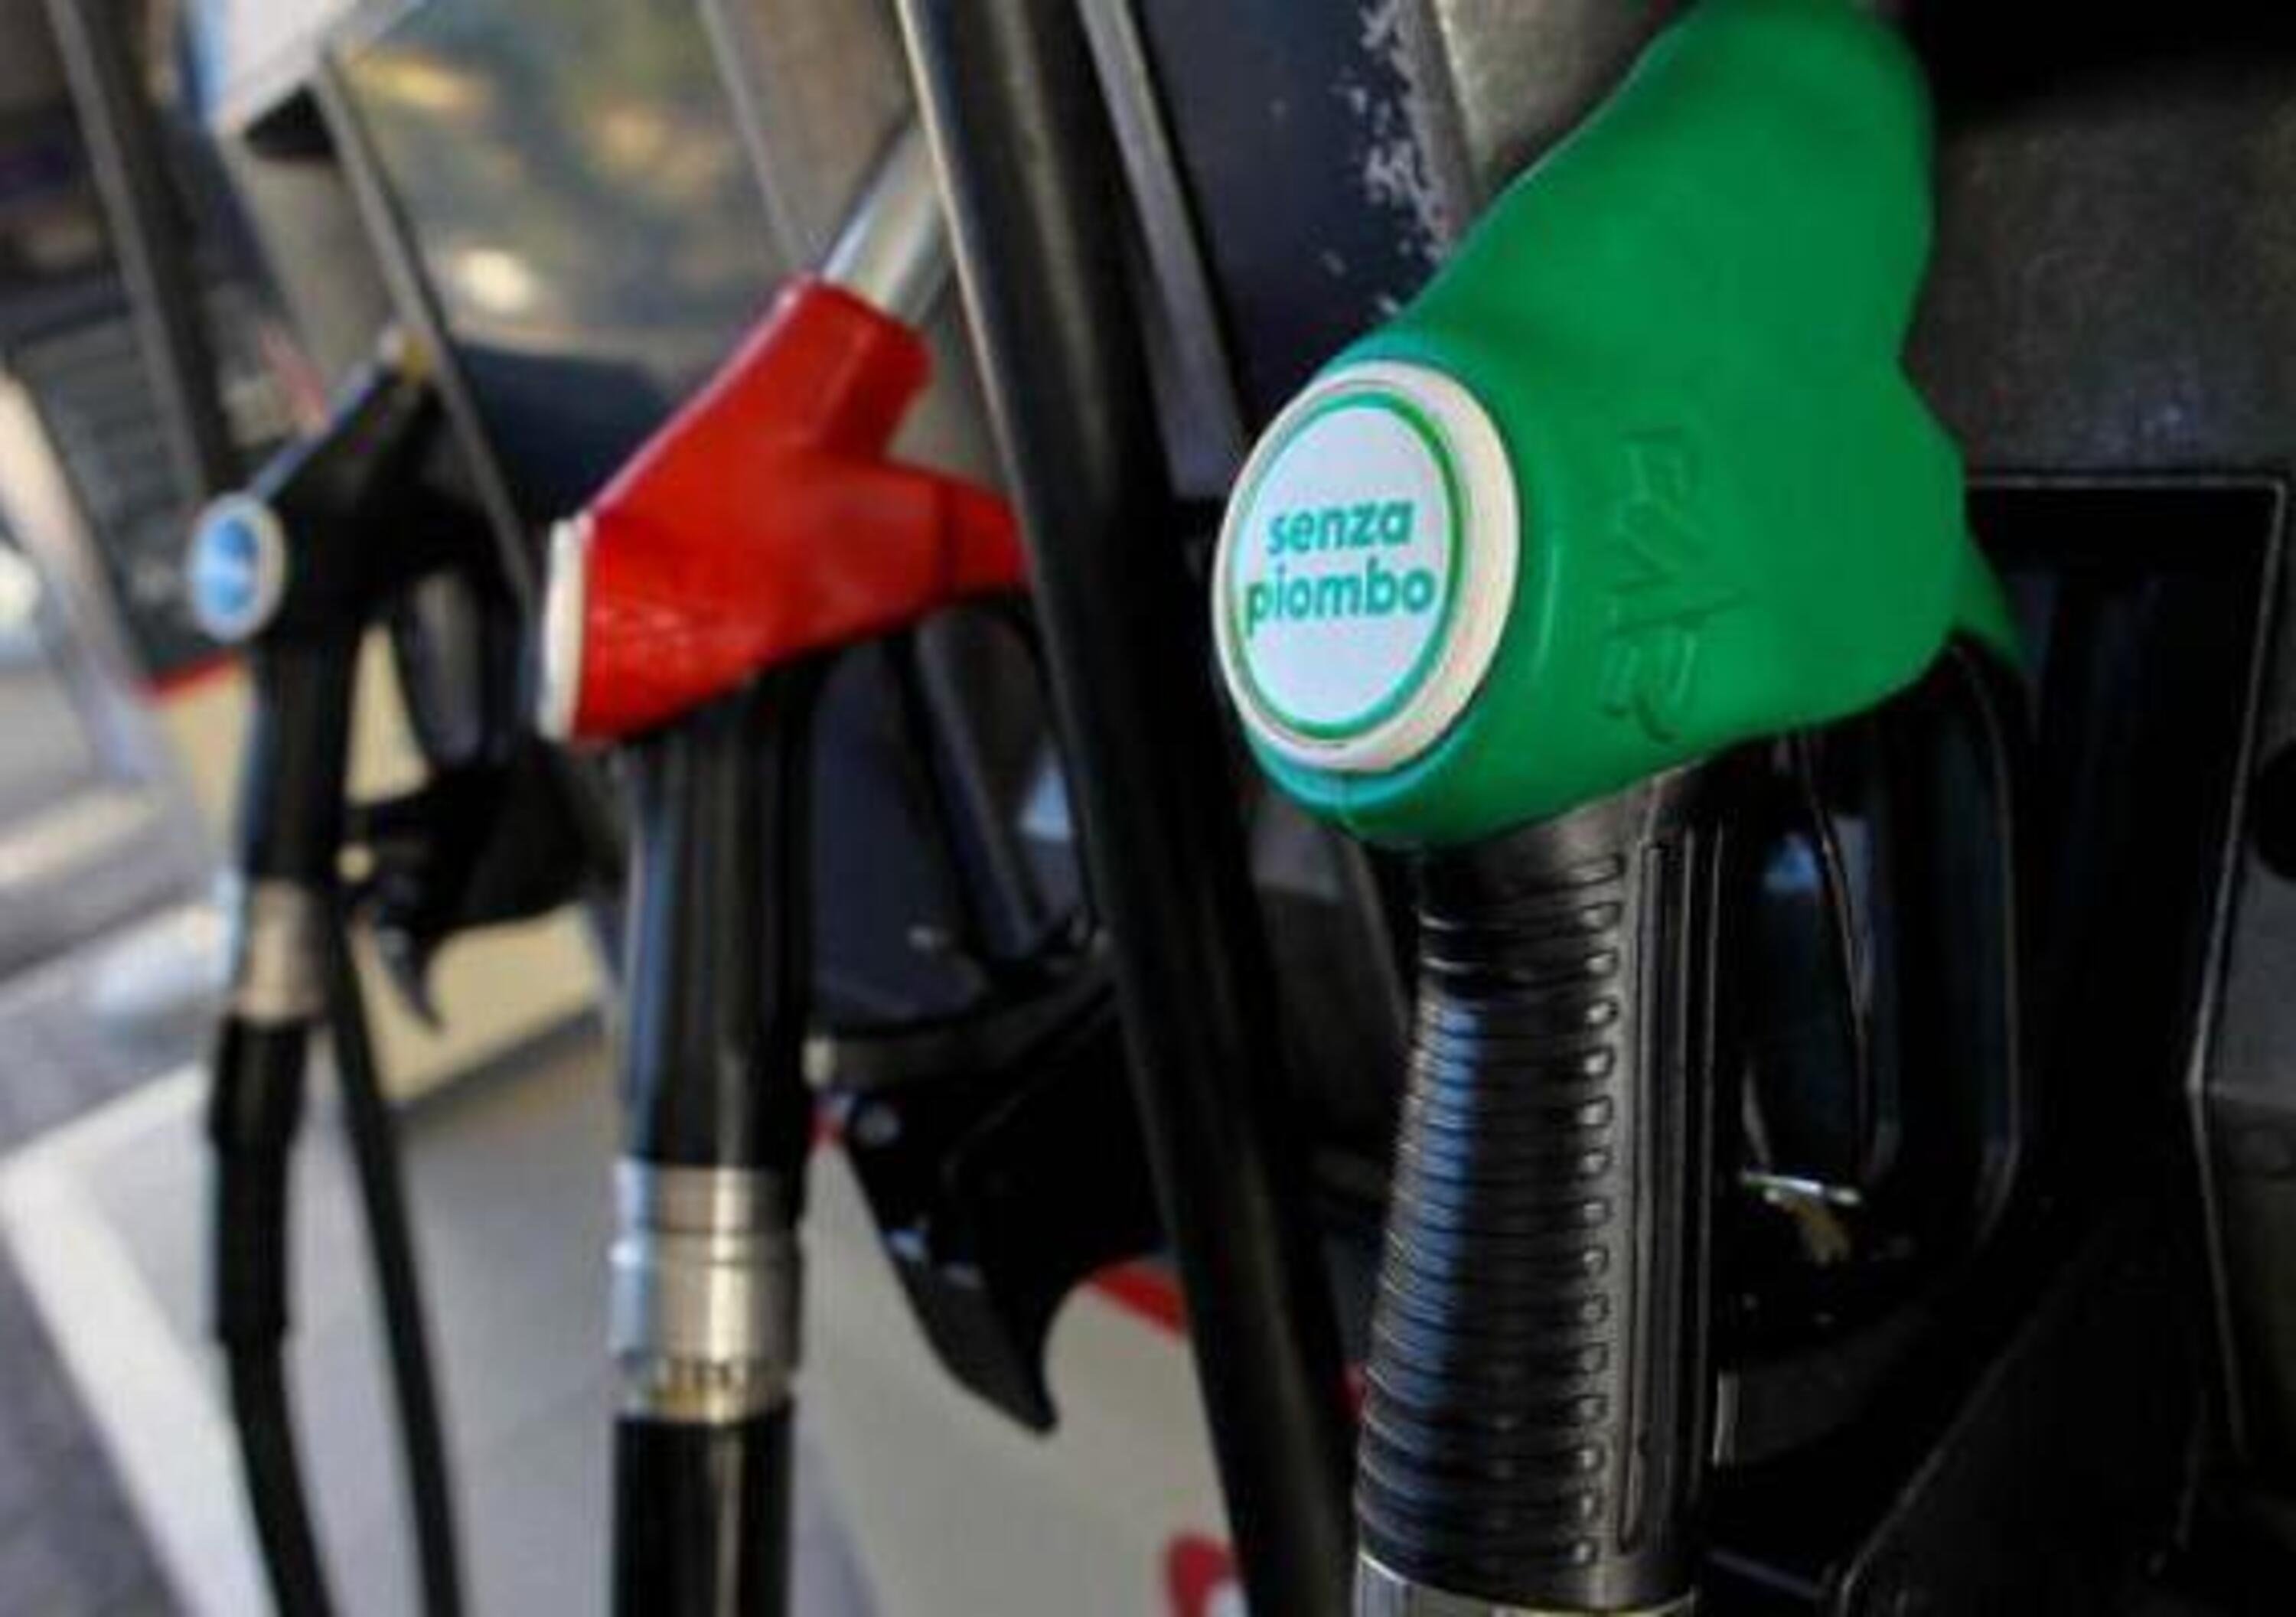 Prelevano benzina gratis per un guasto al distributore: denunciati in 122